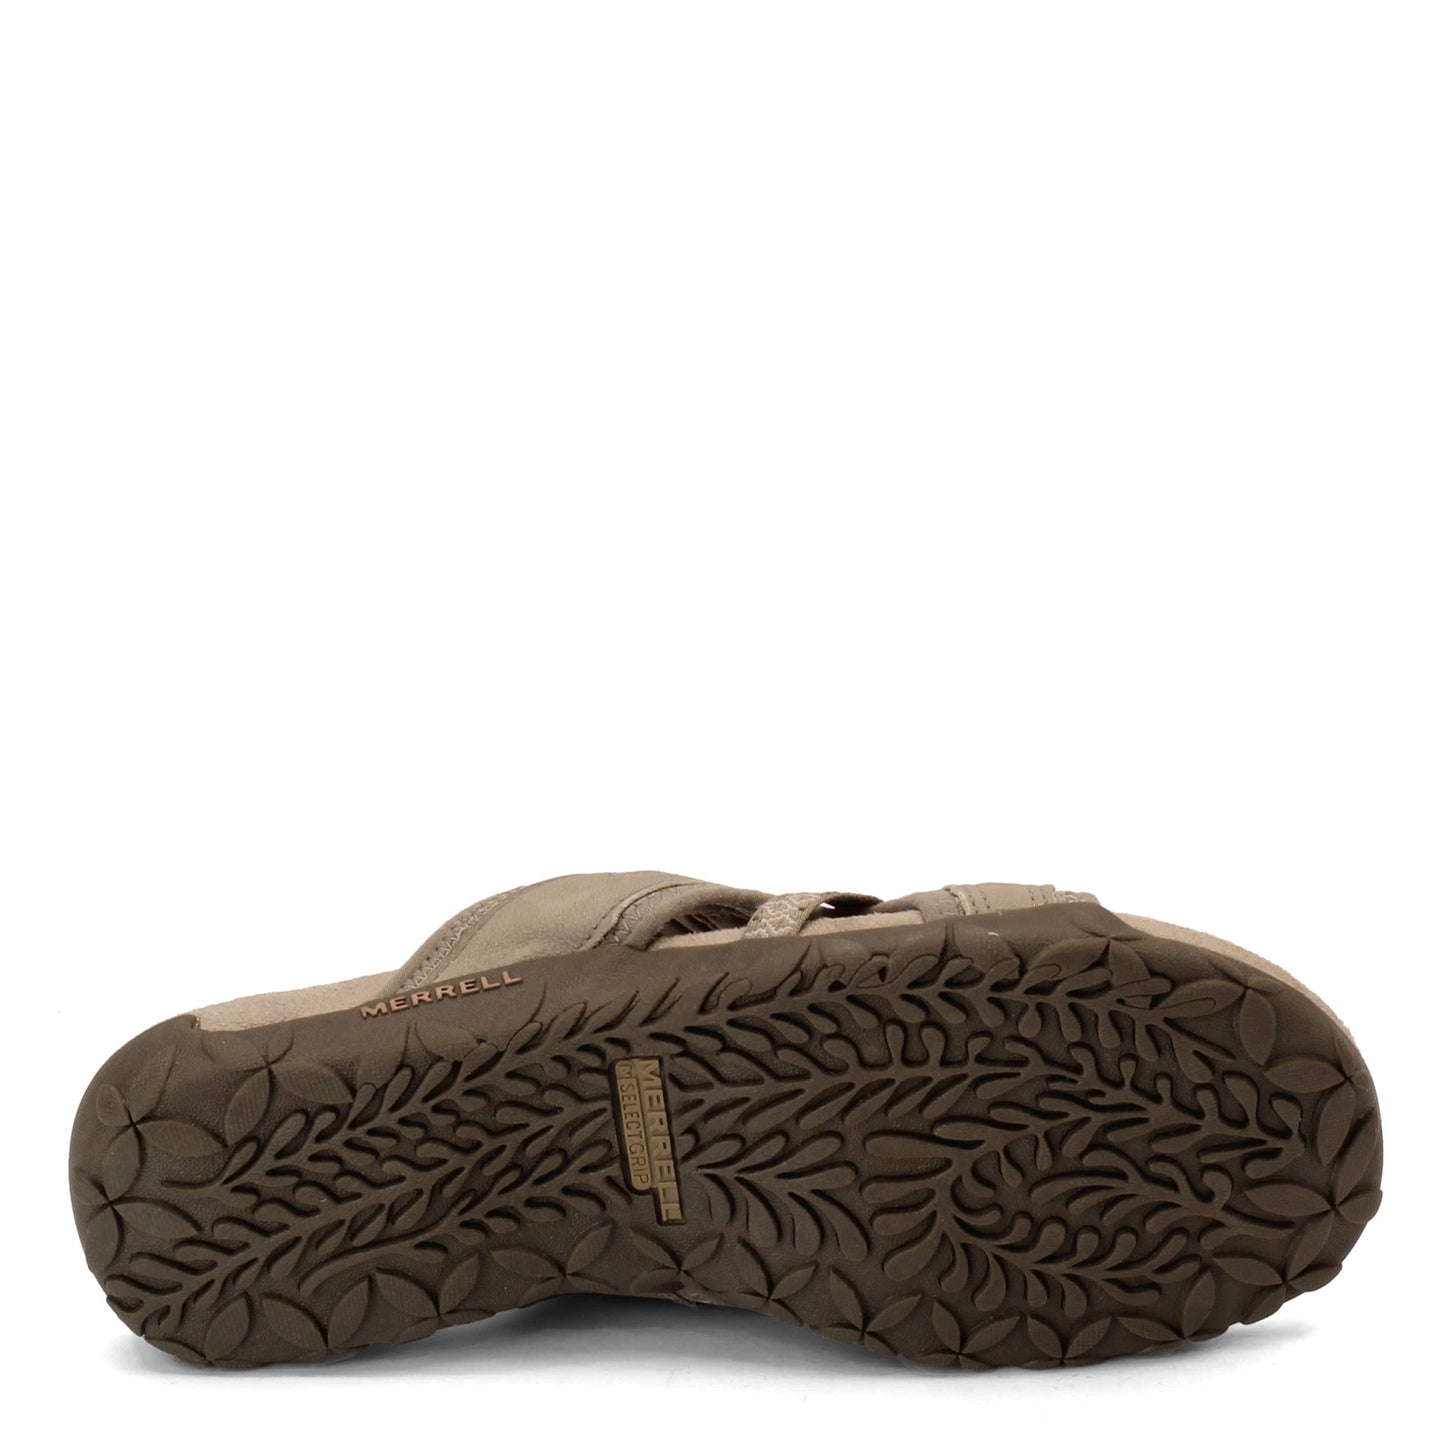 Peltz Shoes  Women's Merrell Terran Slide II Sandal TAUPE J02768